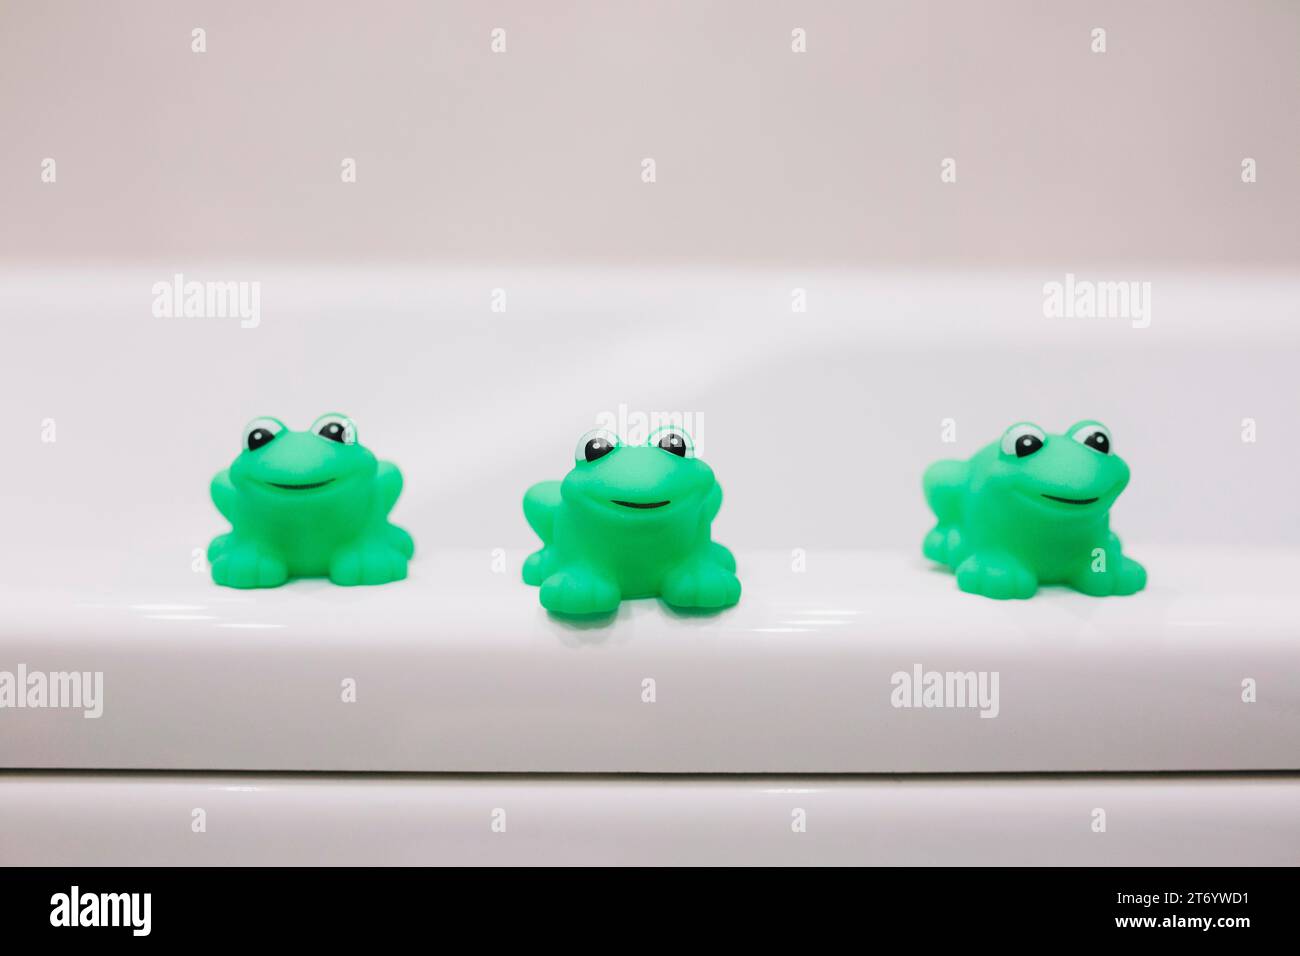 https://c8.alamy.com/comp/2T6YWD1/rubber-frogs-bathing-2T6YWD1.jpg